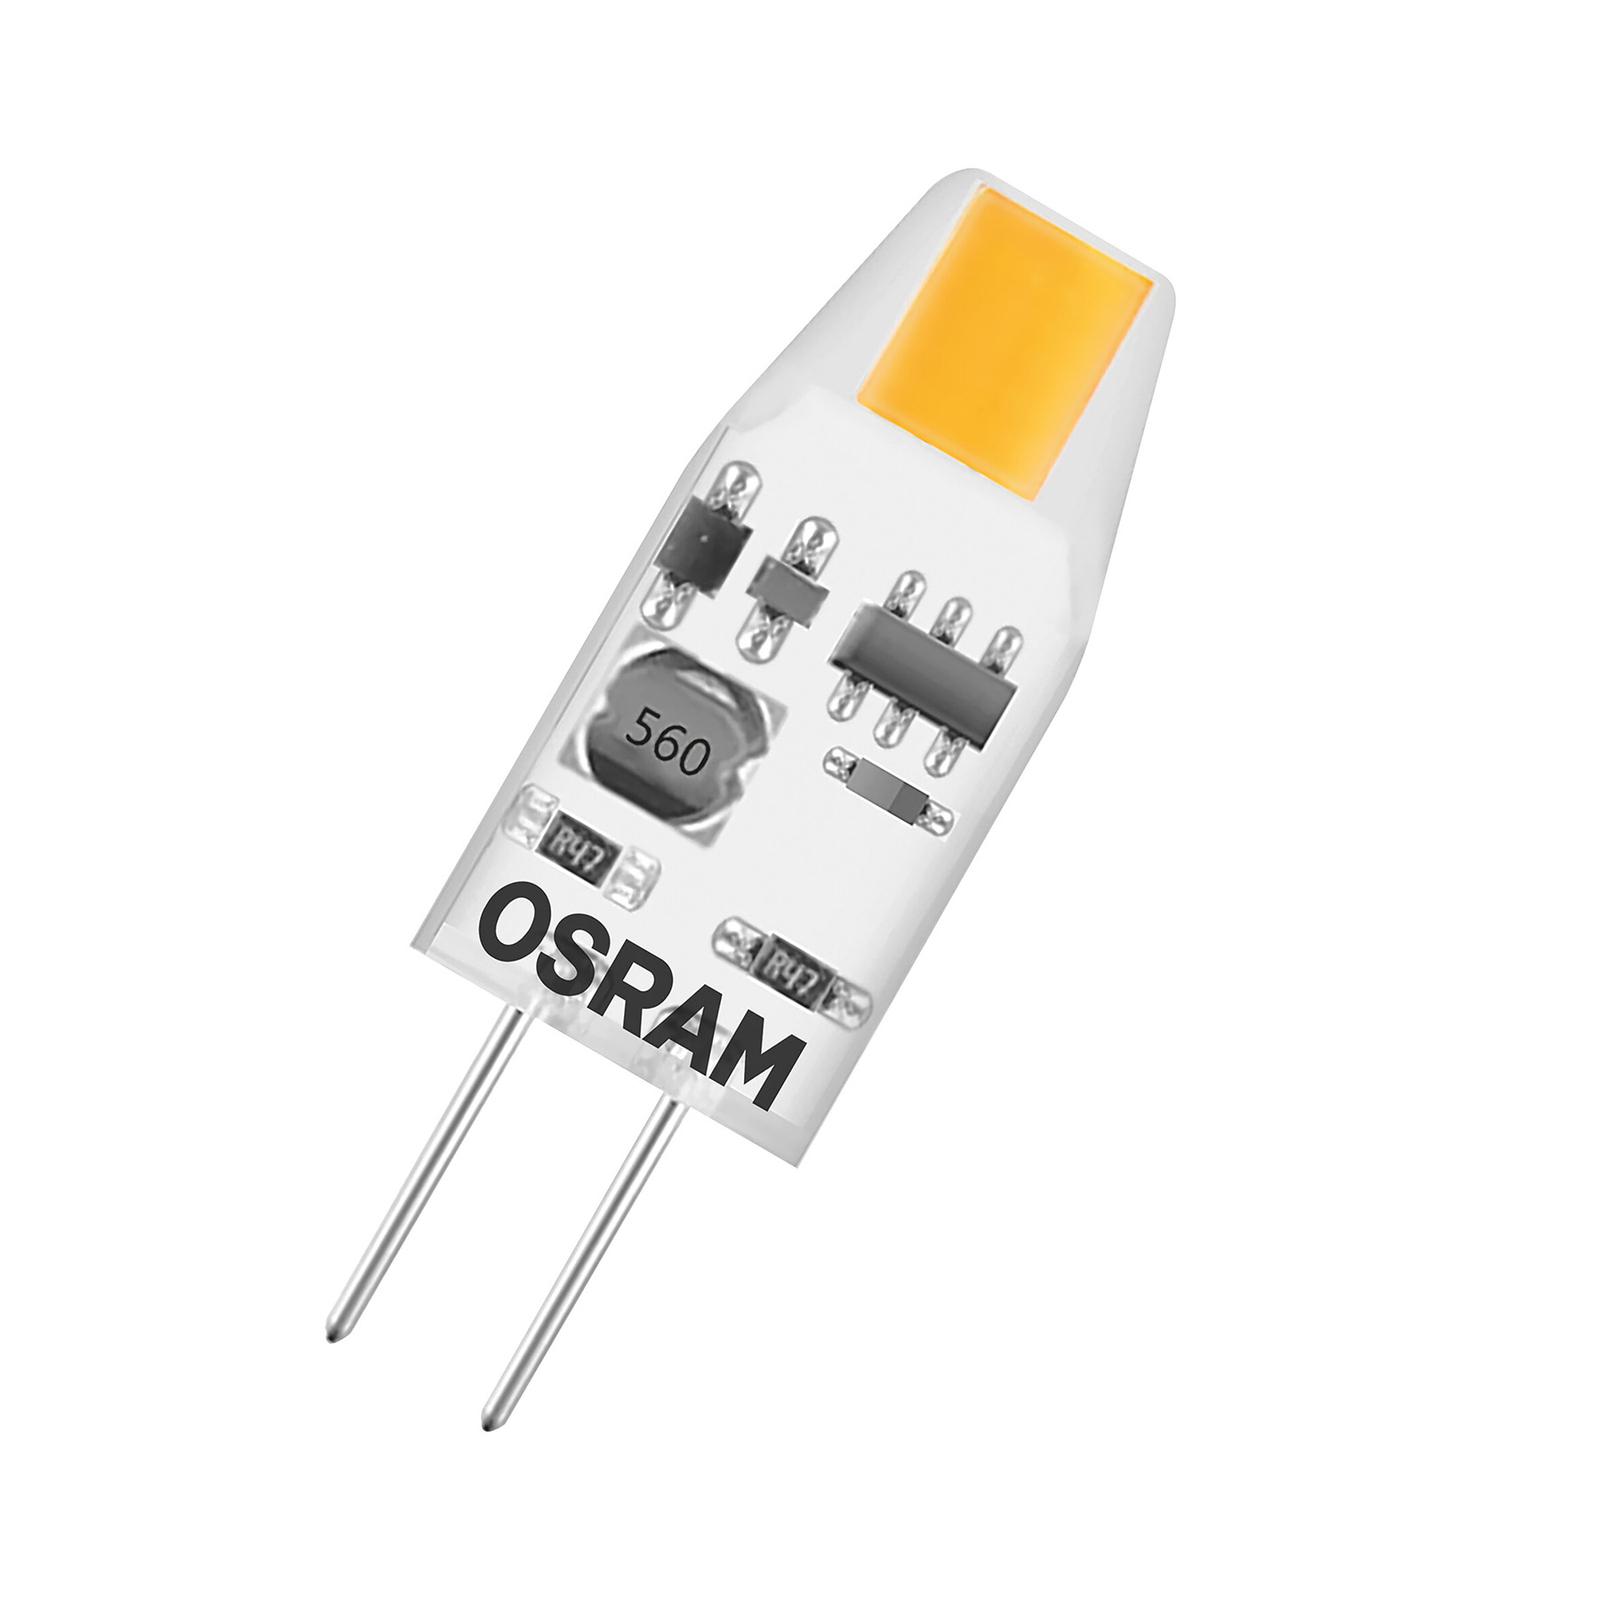 OSRAM PIN Micro LED-stiftsokkel G4 1 W 100lm 2700K